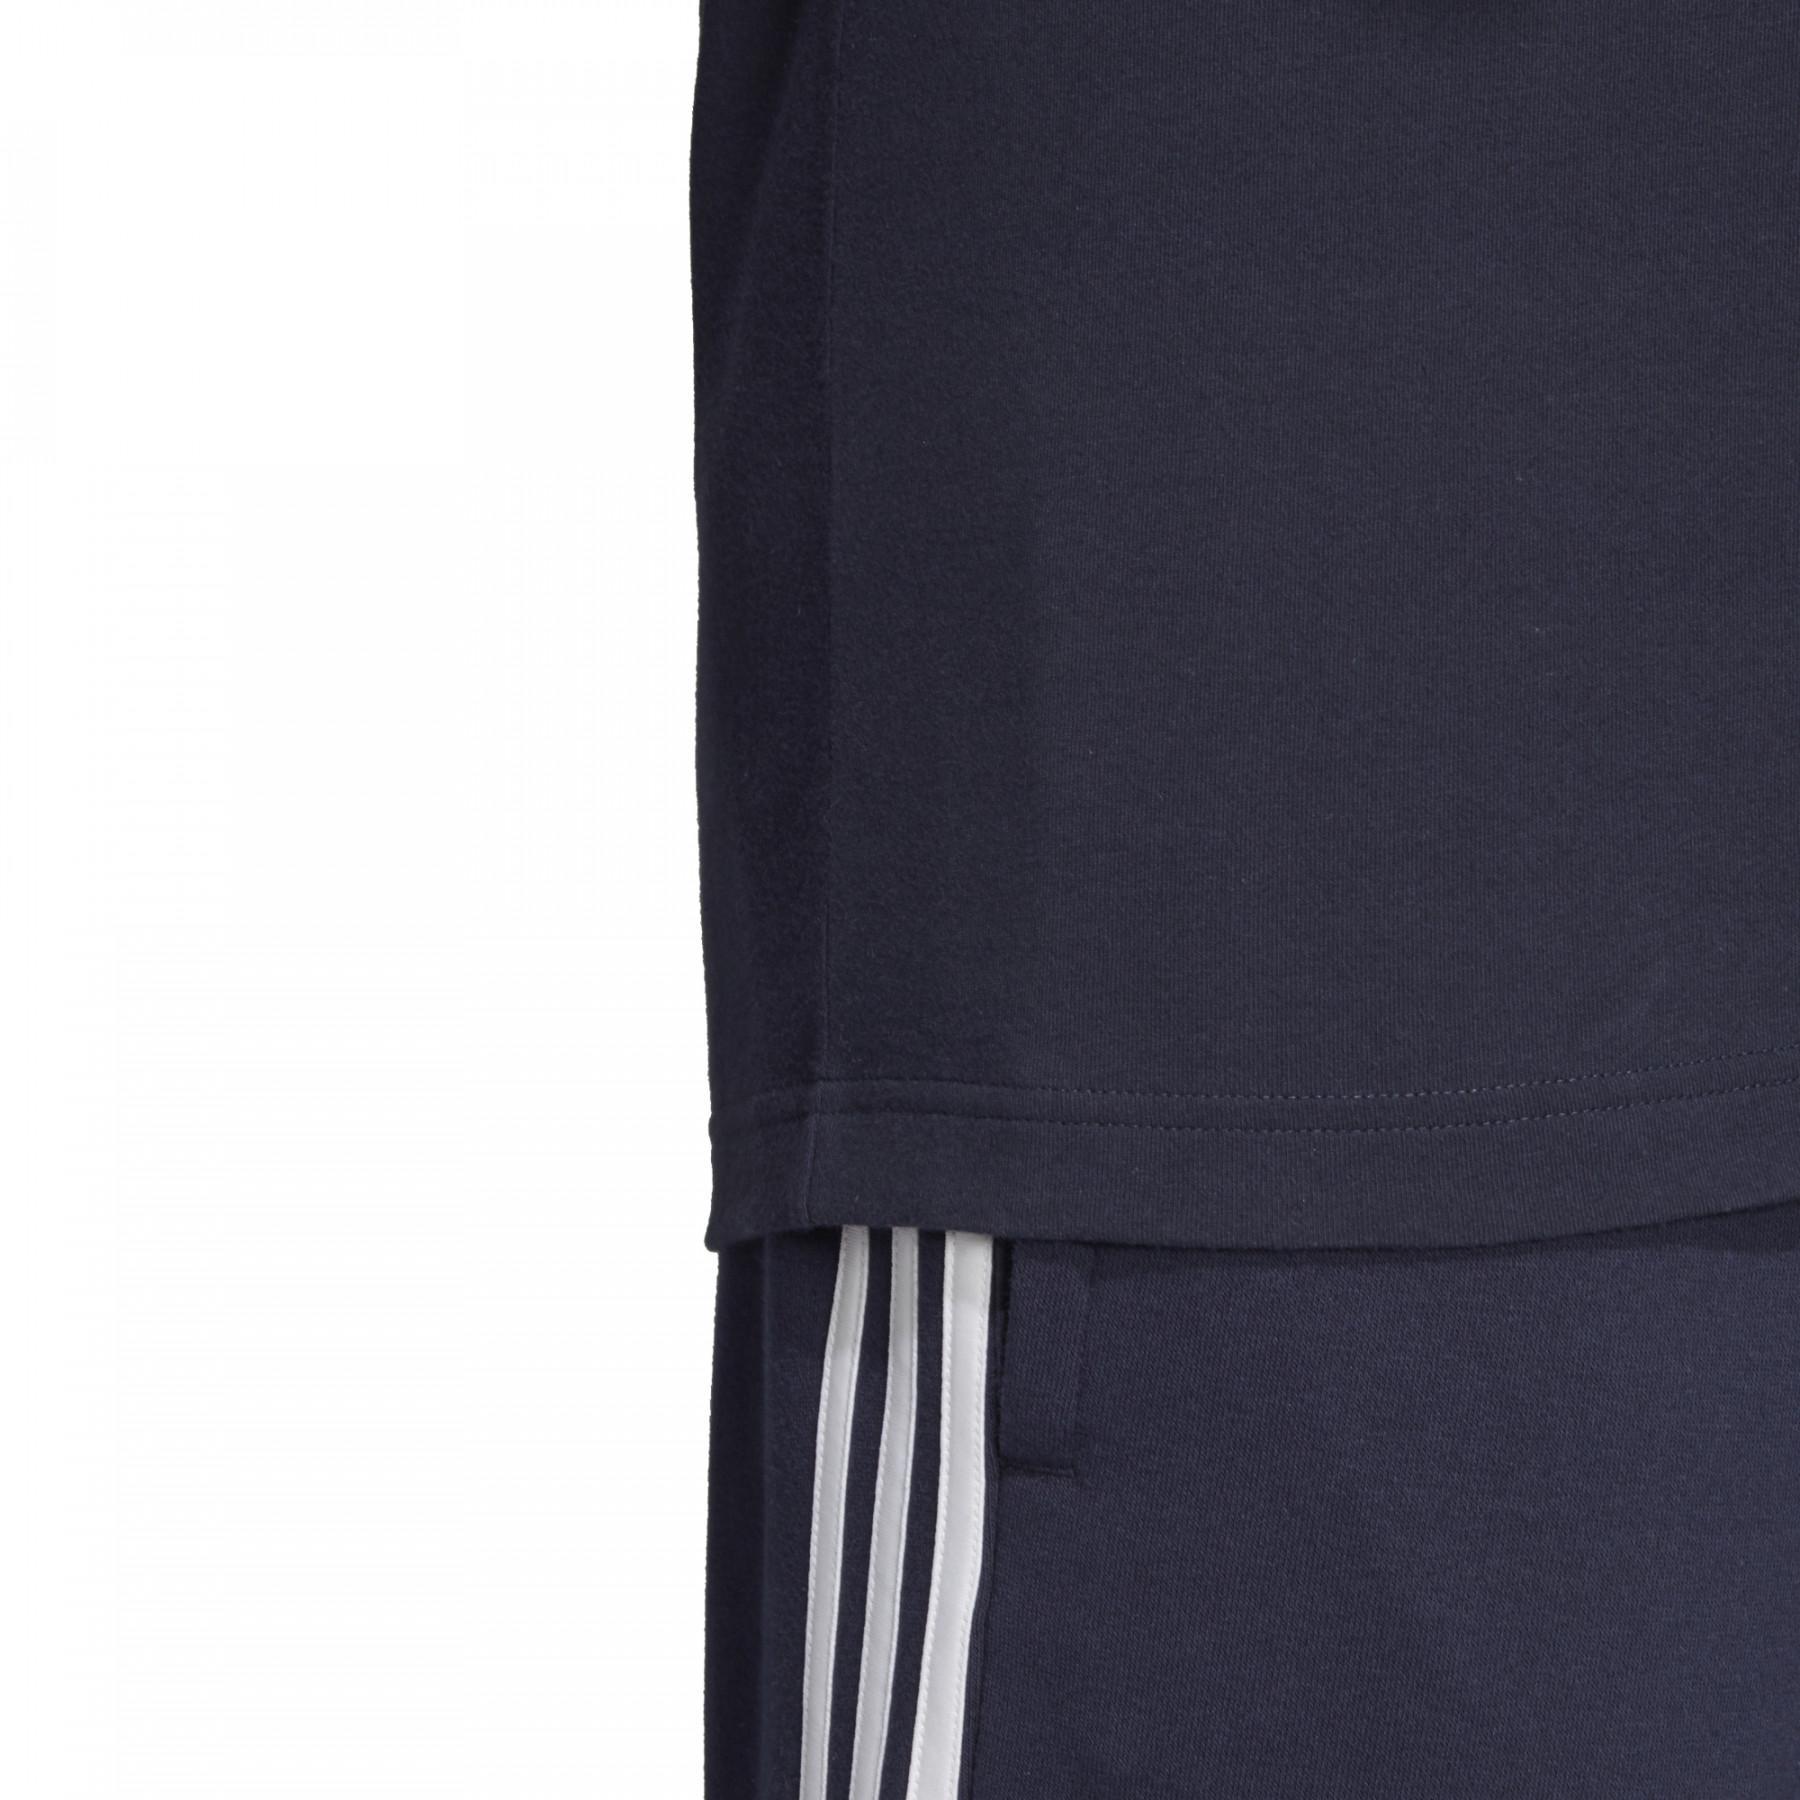 Koszulka adidas Essentials 3-Stripes